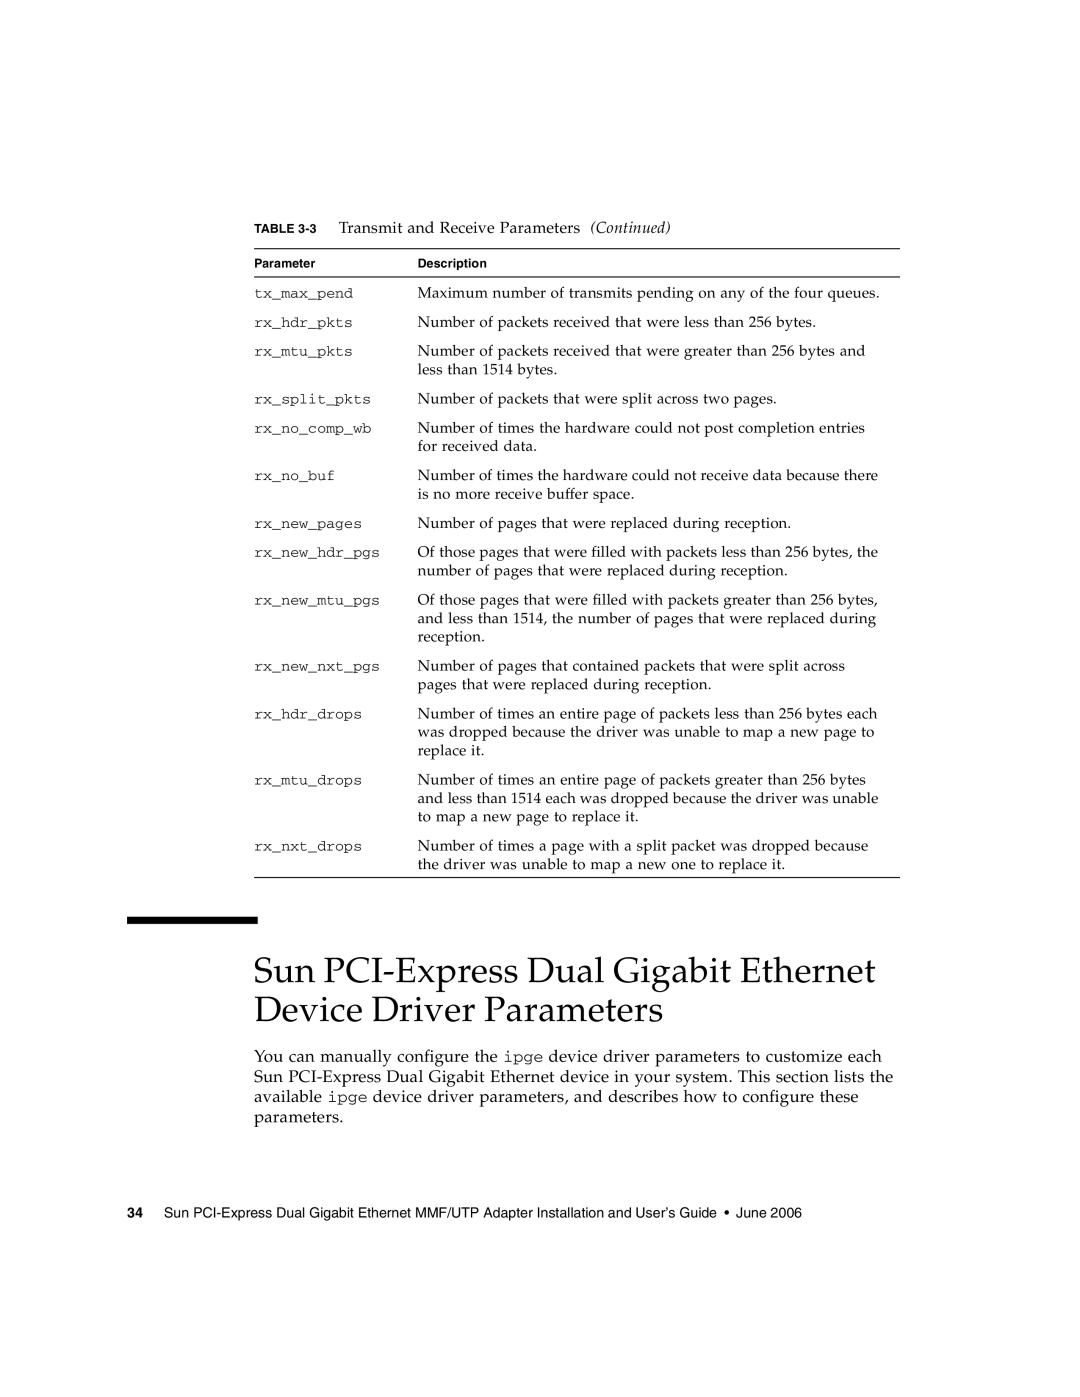 Sun Microsystems Gigabit Ethernet MMF/UTP Adapter manual Sun PCI-Express Dual Gigabit Ethernet Device Driver Parameters 